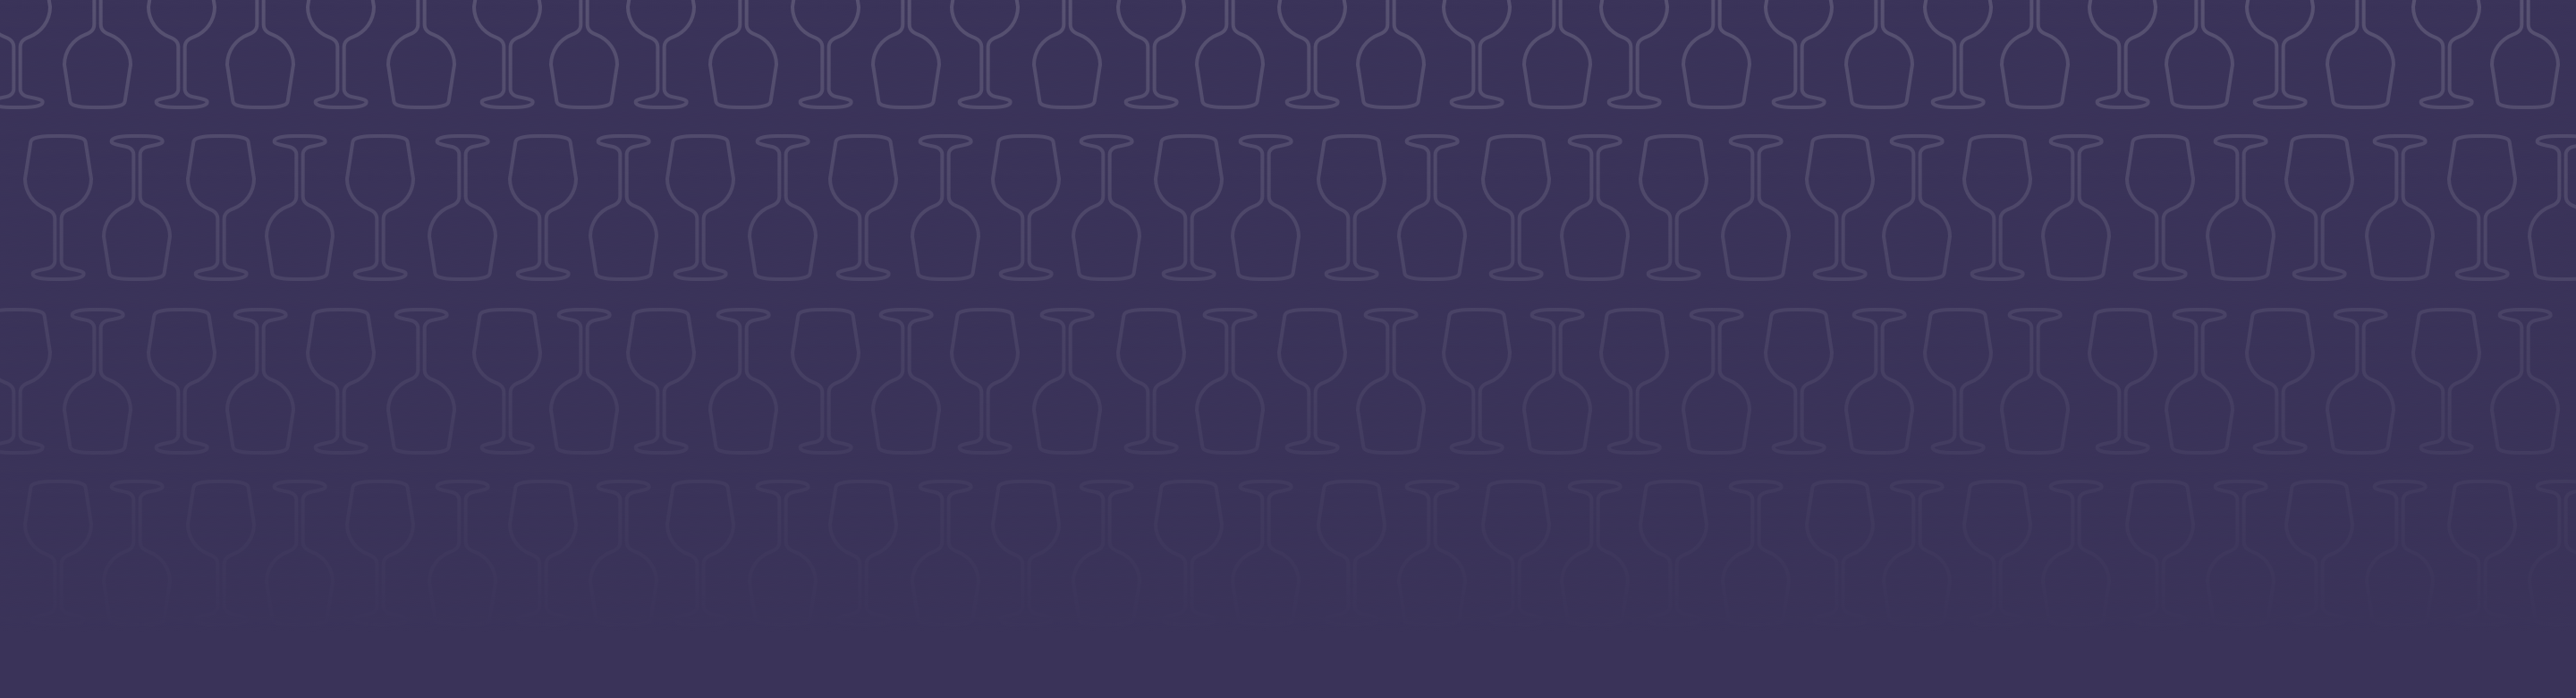 purple background with wine glass pattern